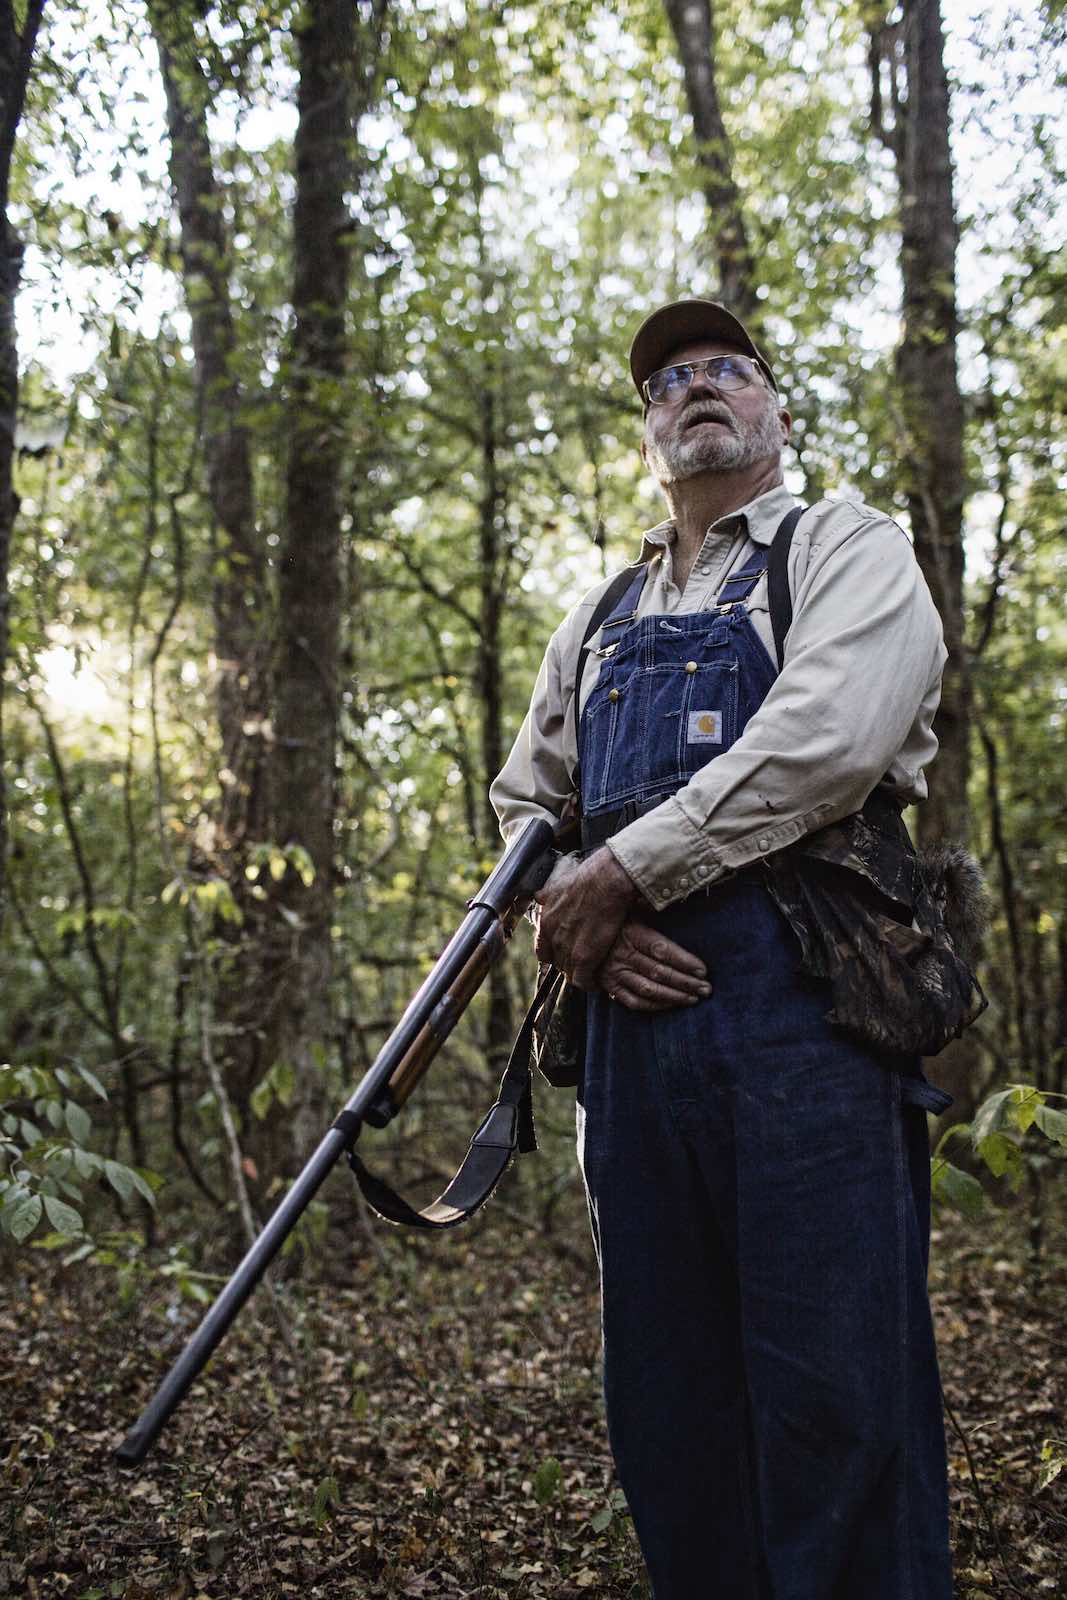 Jody Horton Photography - Hunter carrying shot gun while searching trees. 